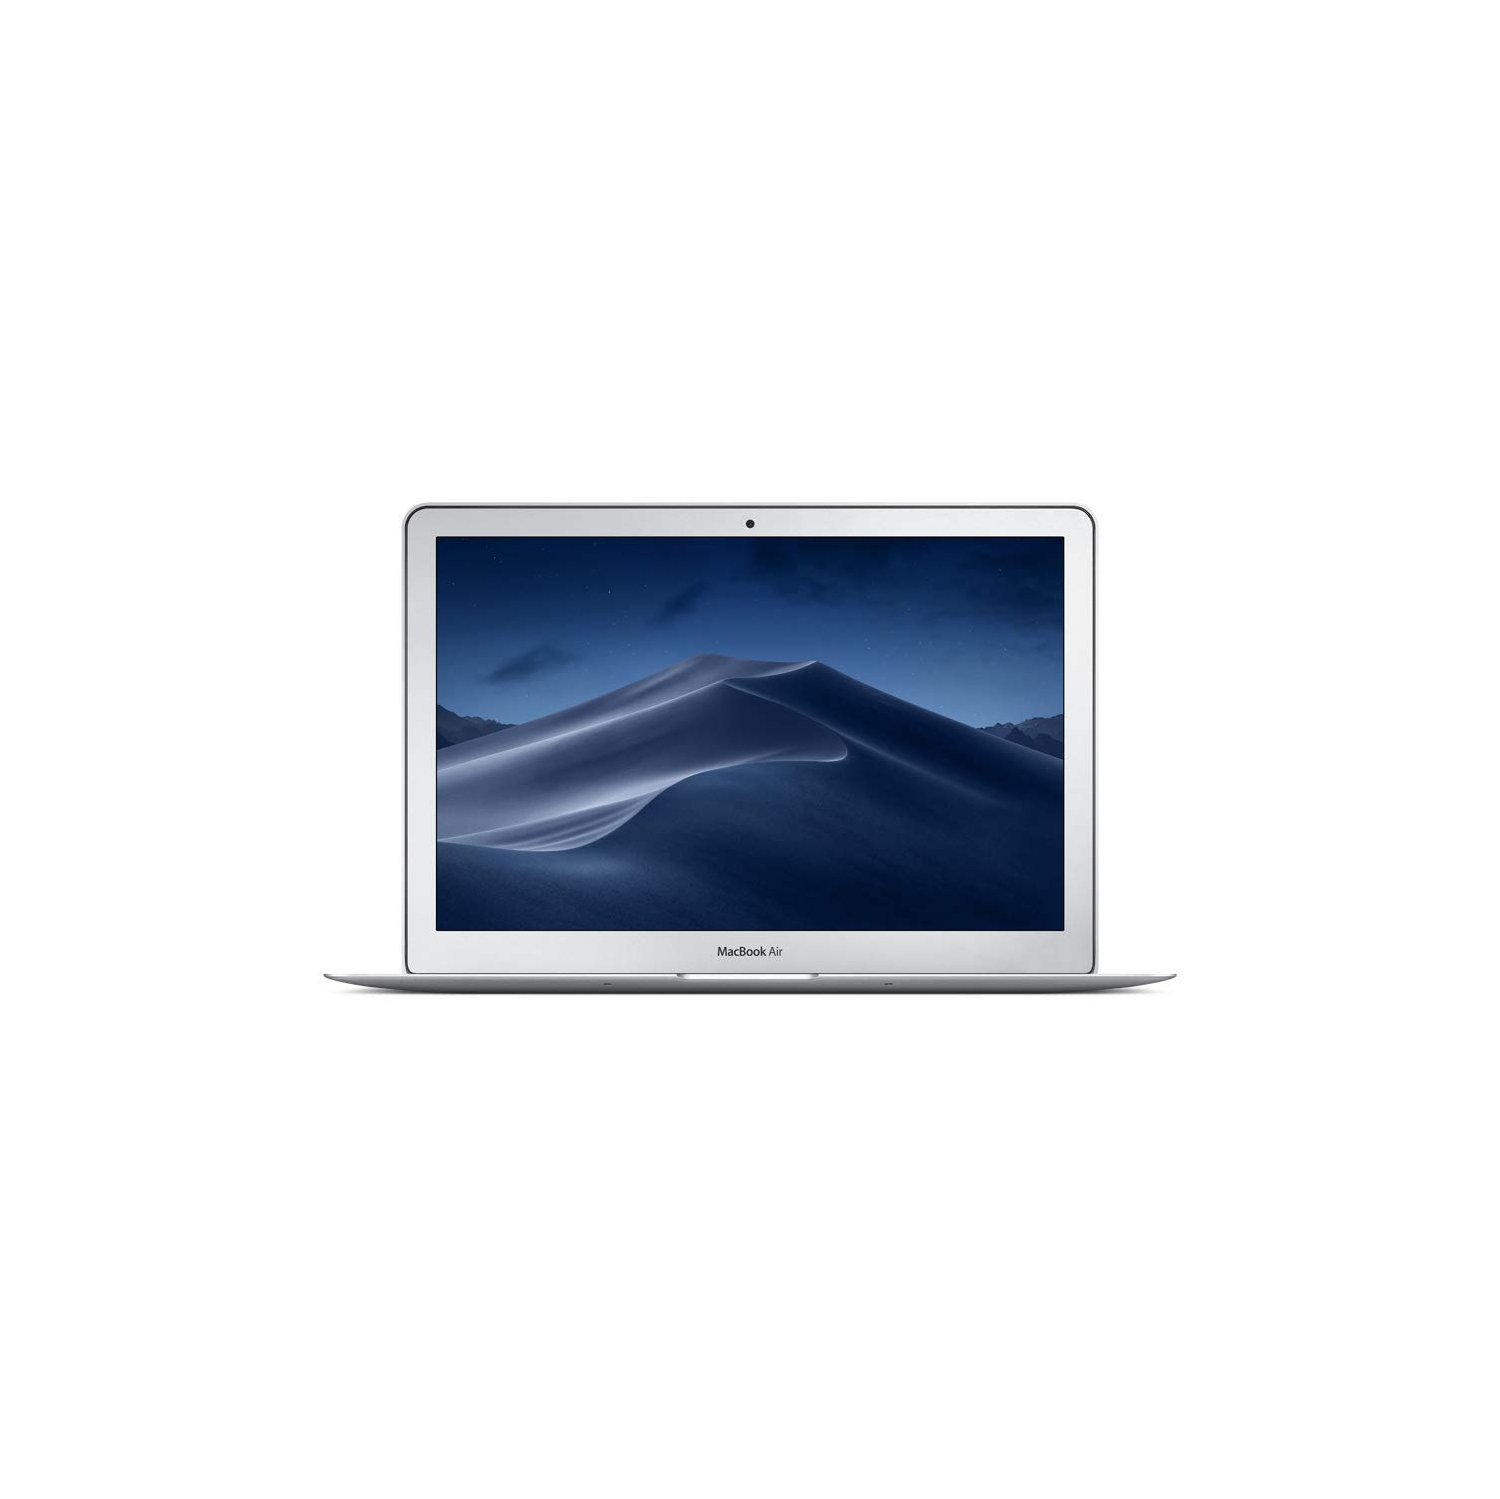 Refurbished (Excellent) - Apple MacBook Air 13.3" A1466 MQD32LL/A (MID 2017) Intel Core i5 1.80GHz, 8GB RAM, 128GB SSD